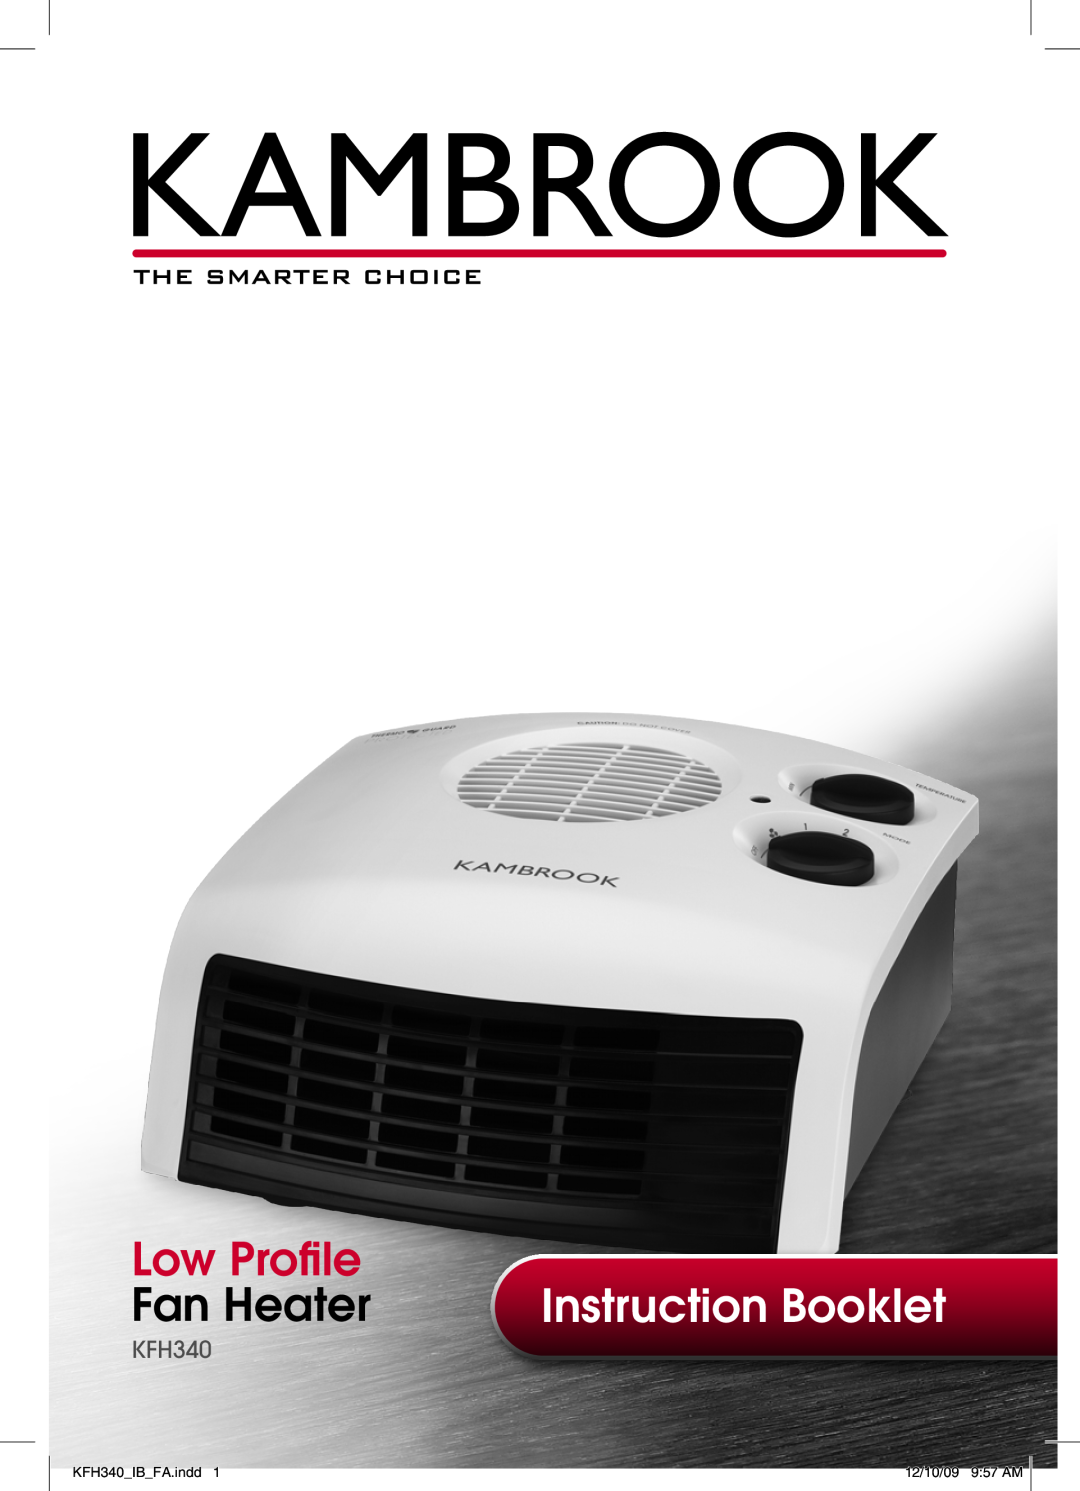 Kambrook manual Low Profile, Fan Heater, Instruction Booklet, KFH340 IB FA.indd, 12/10/09 9 57 AM 